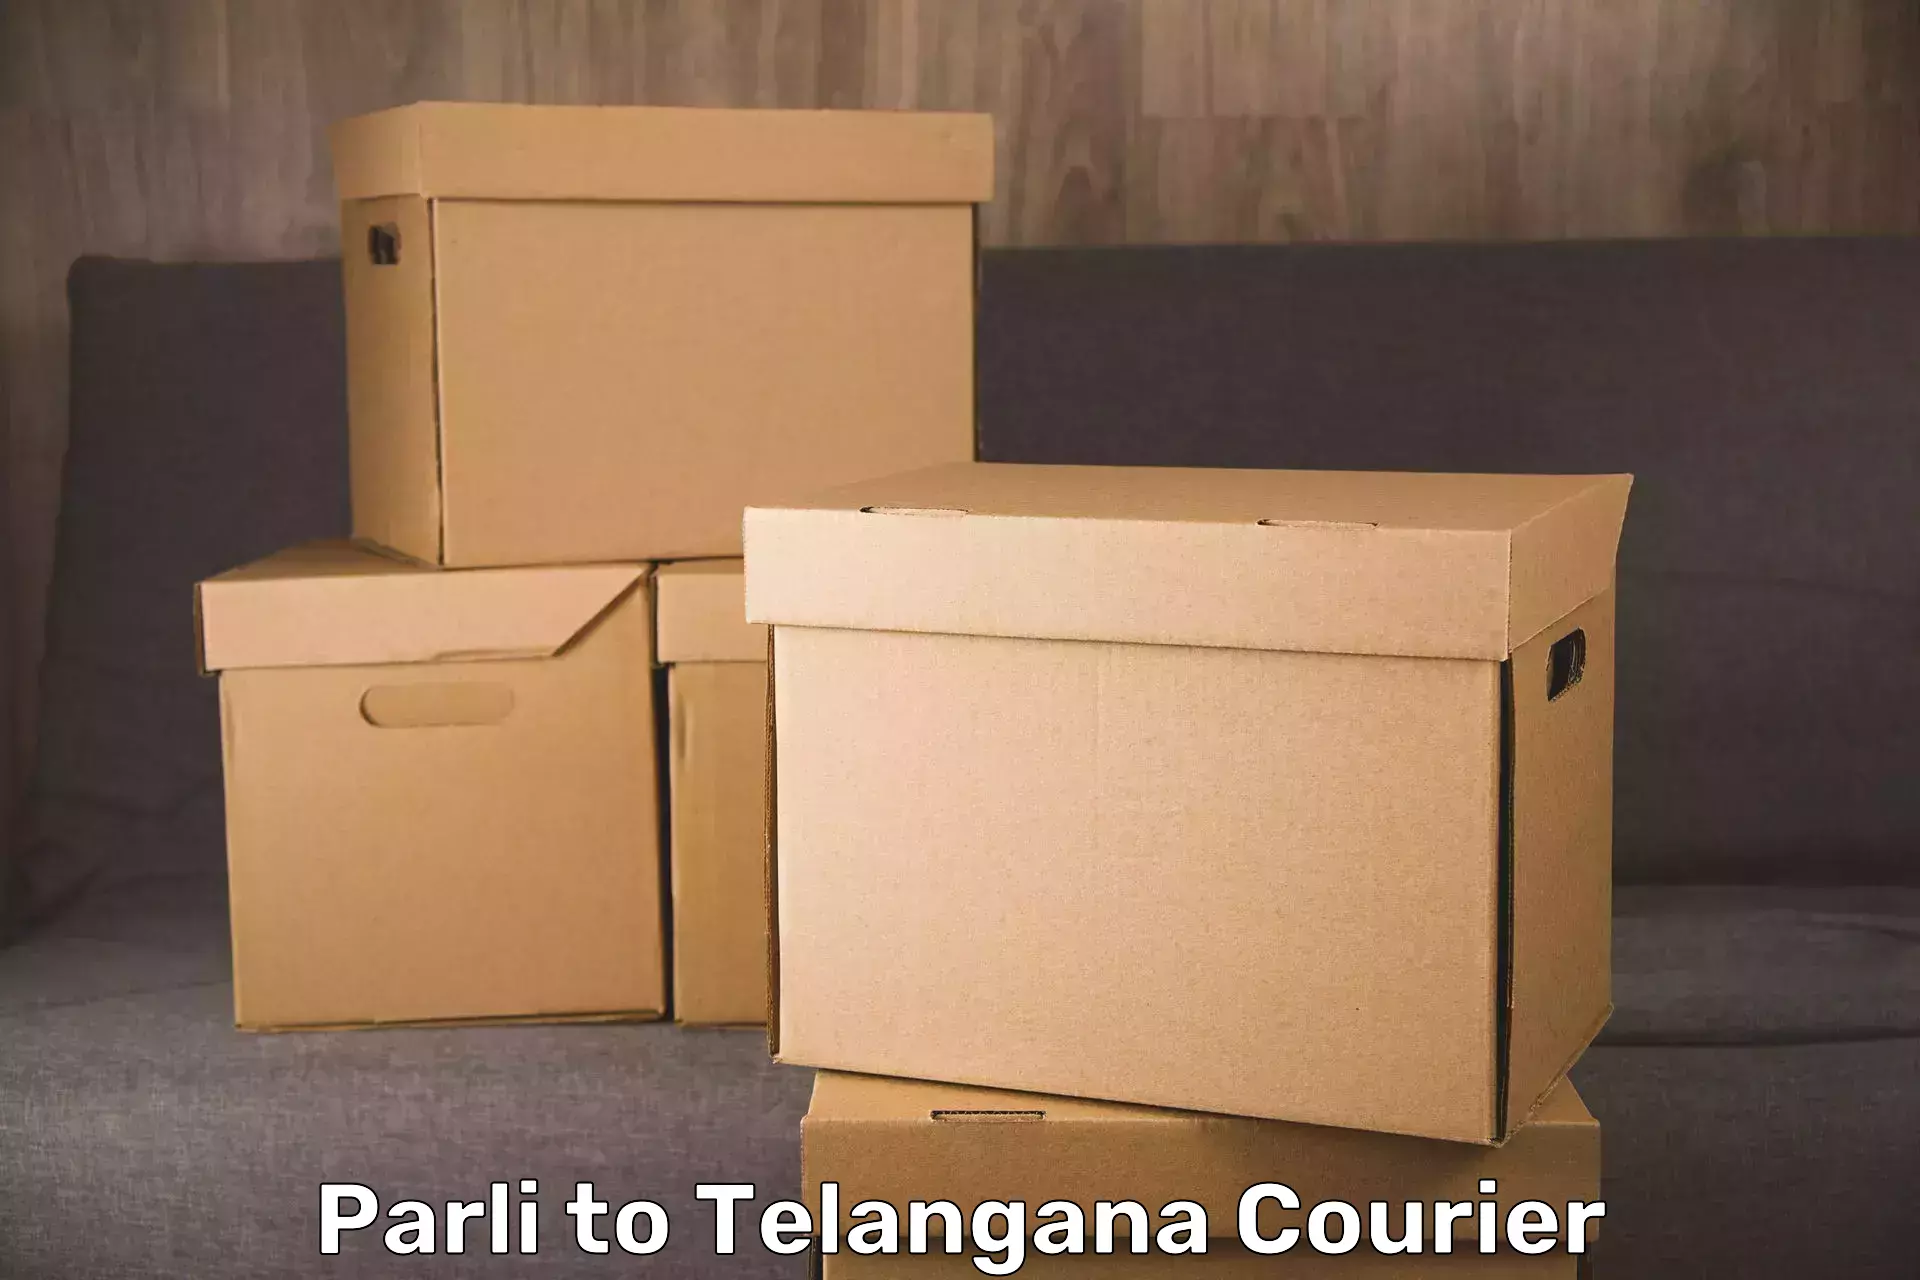 Emergency baggage service Parli to Telangana